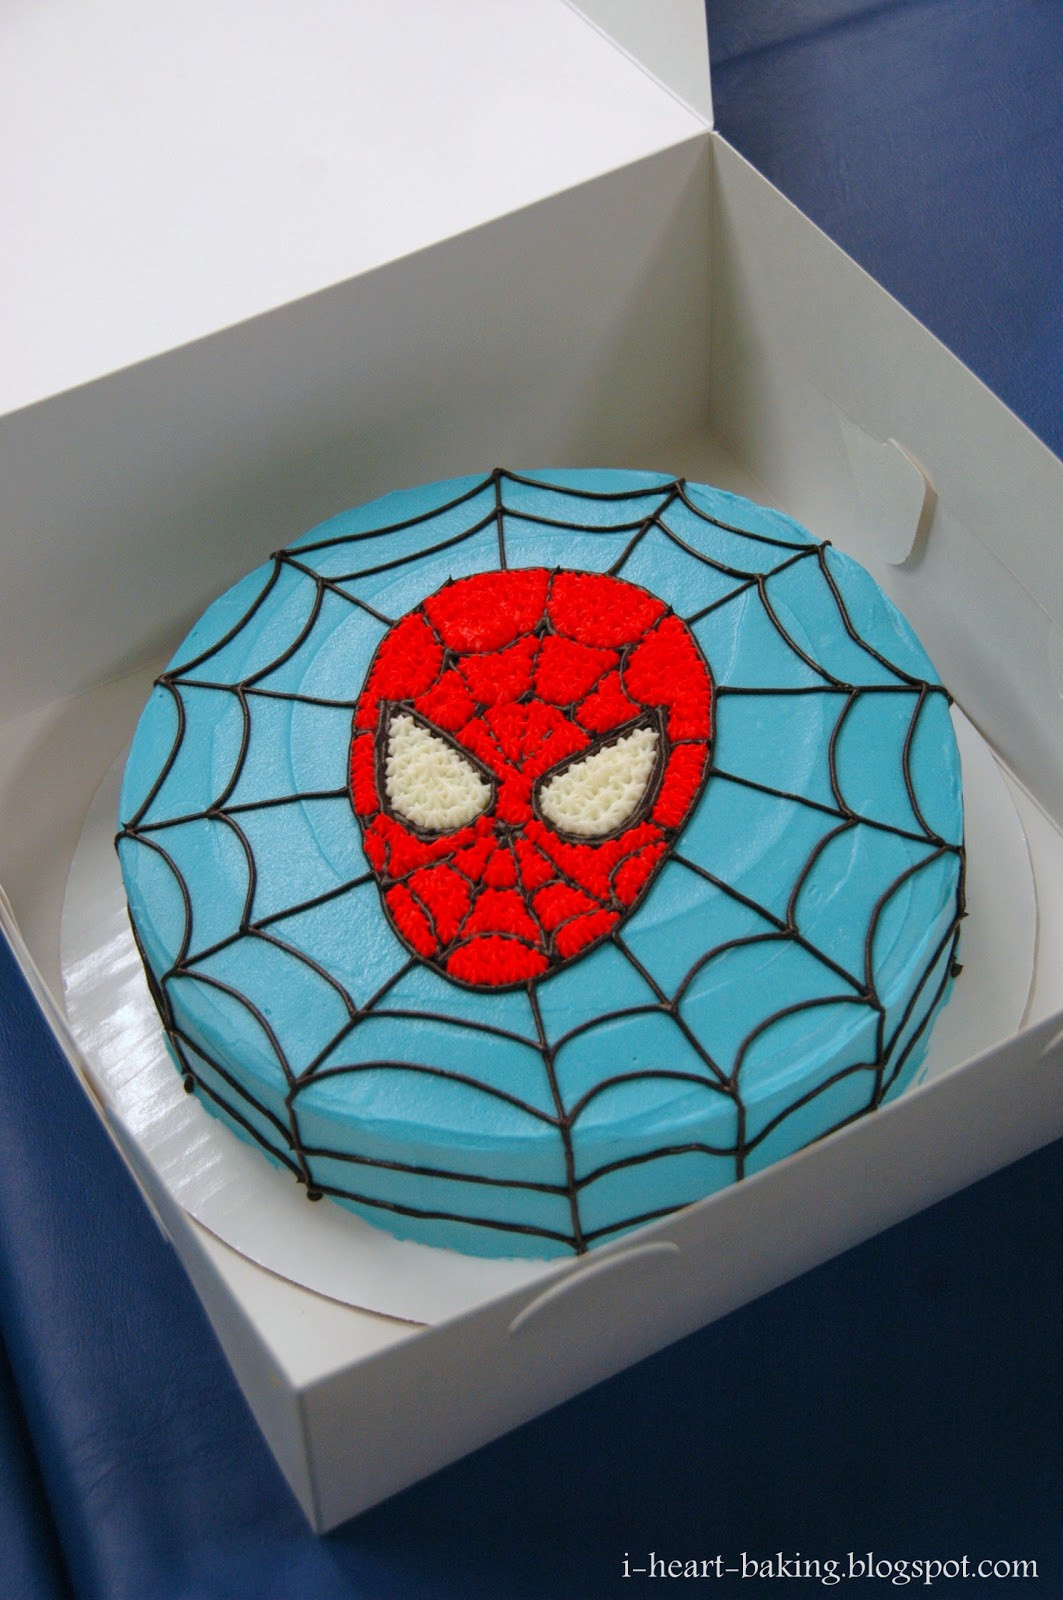 Best ideas about Spiderman Birthday Cake
. Save or Pin i heart baking spiderman birthday cake Now.